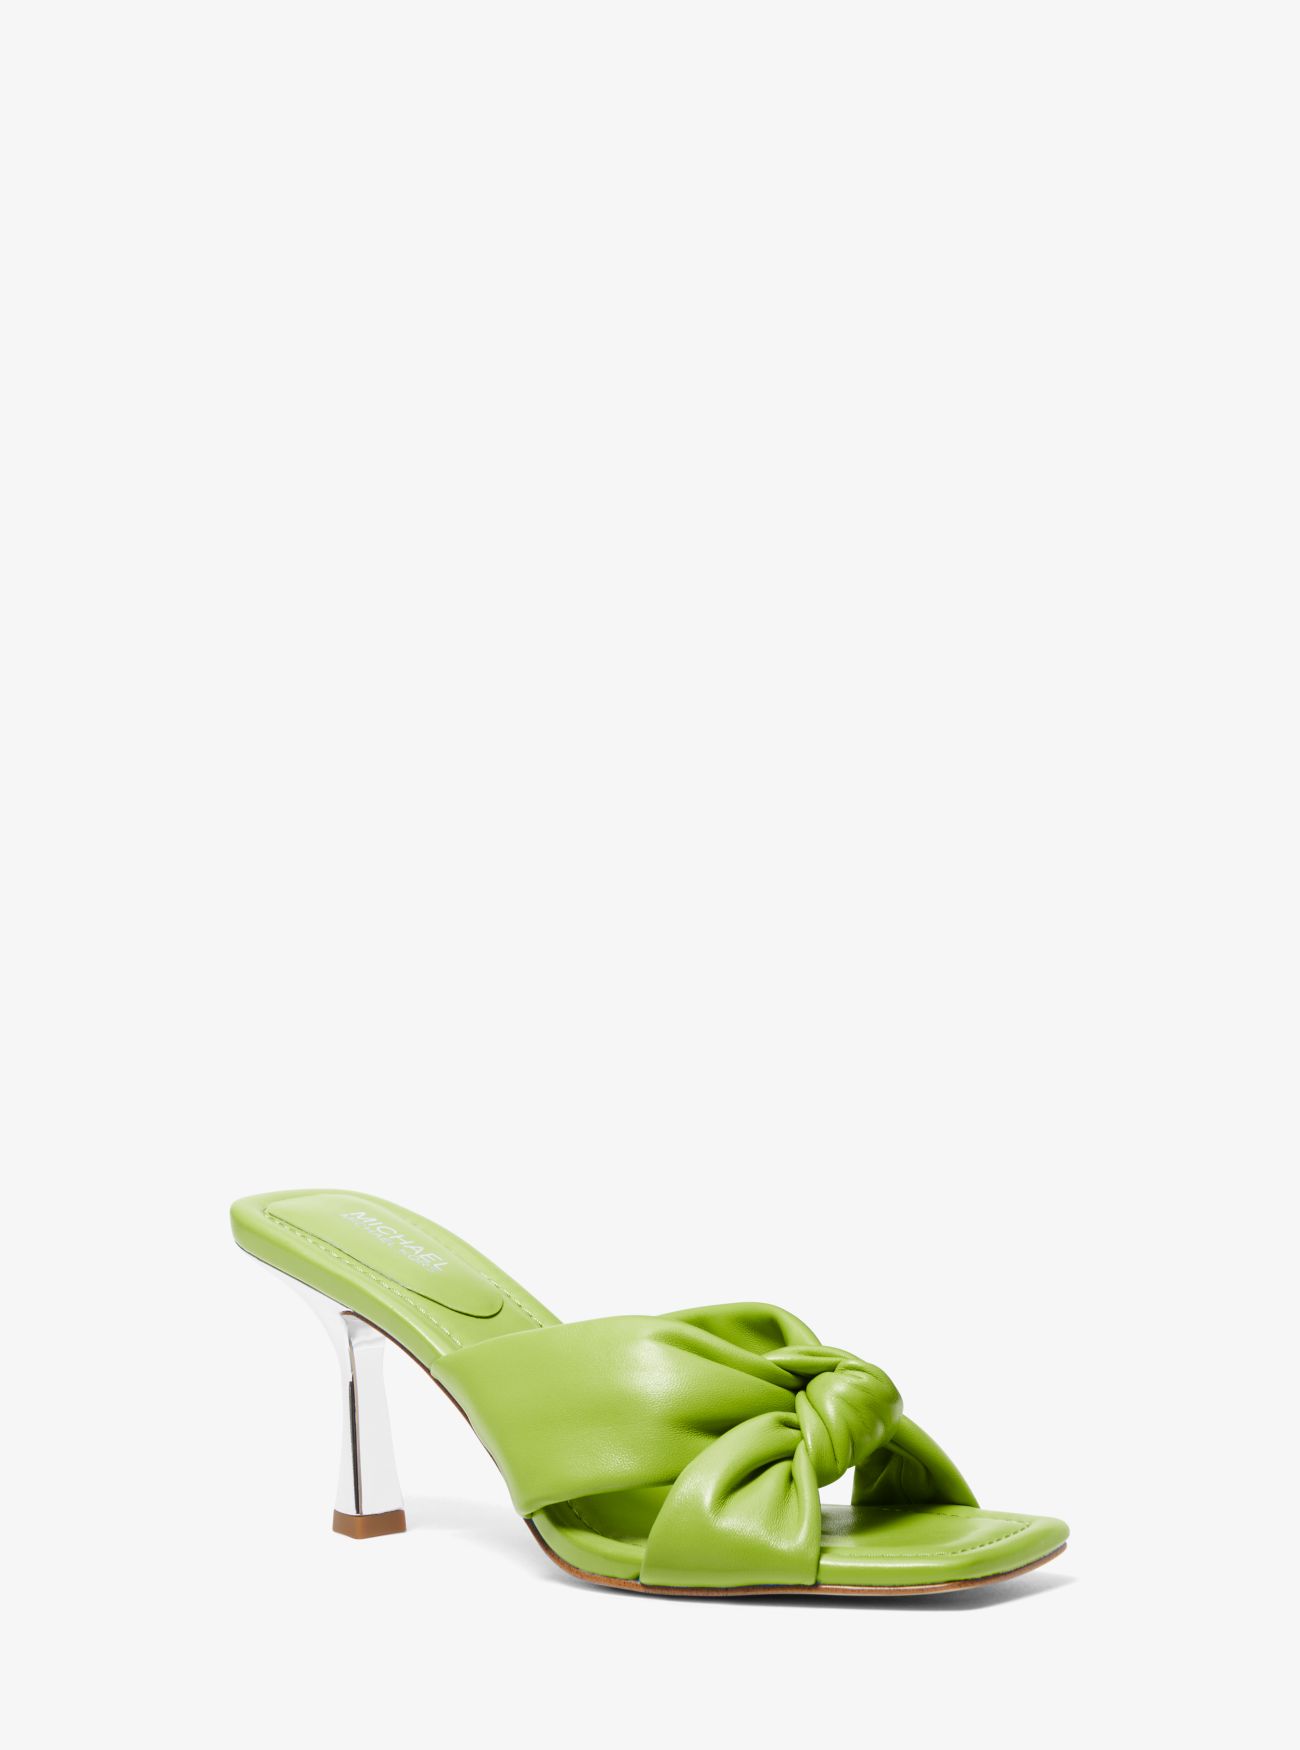 MK Elena Leather Sandal - Green - Michael Kors